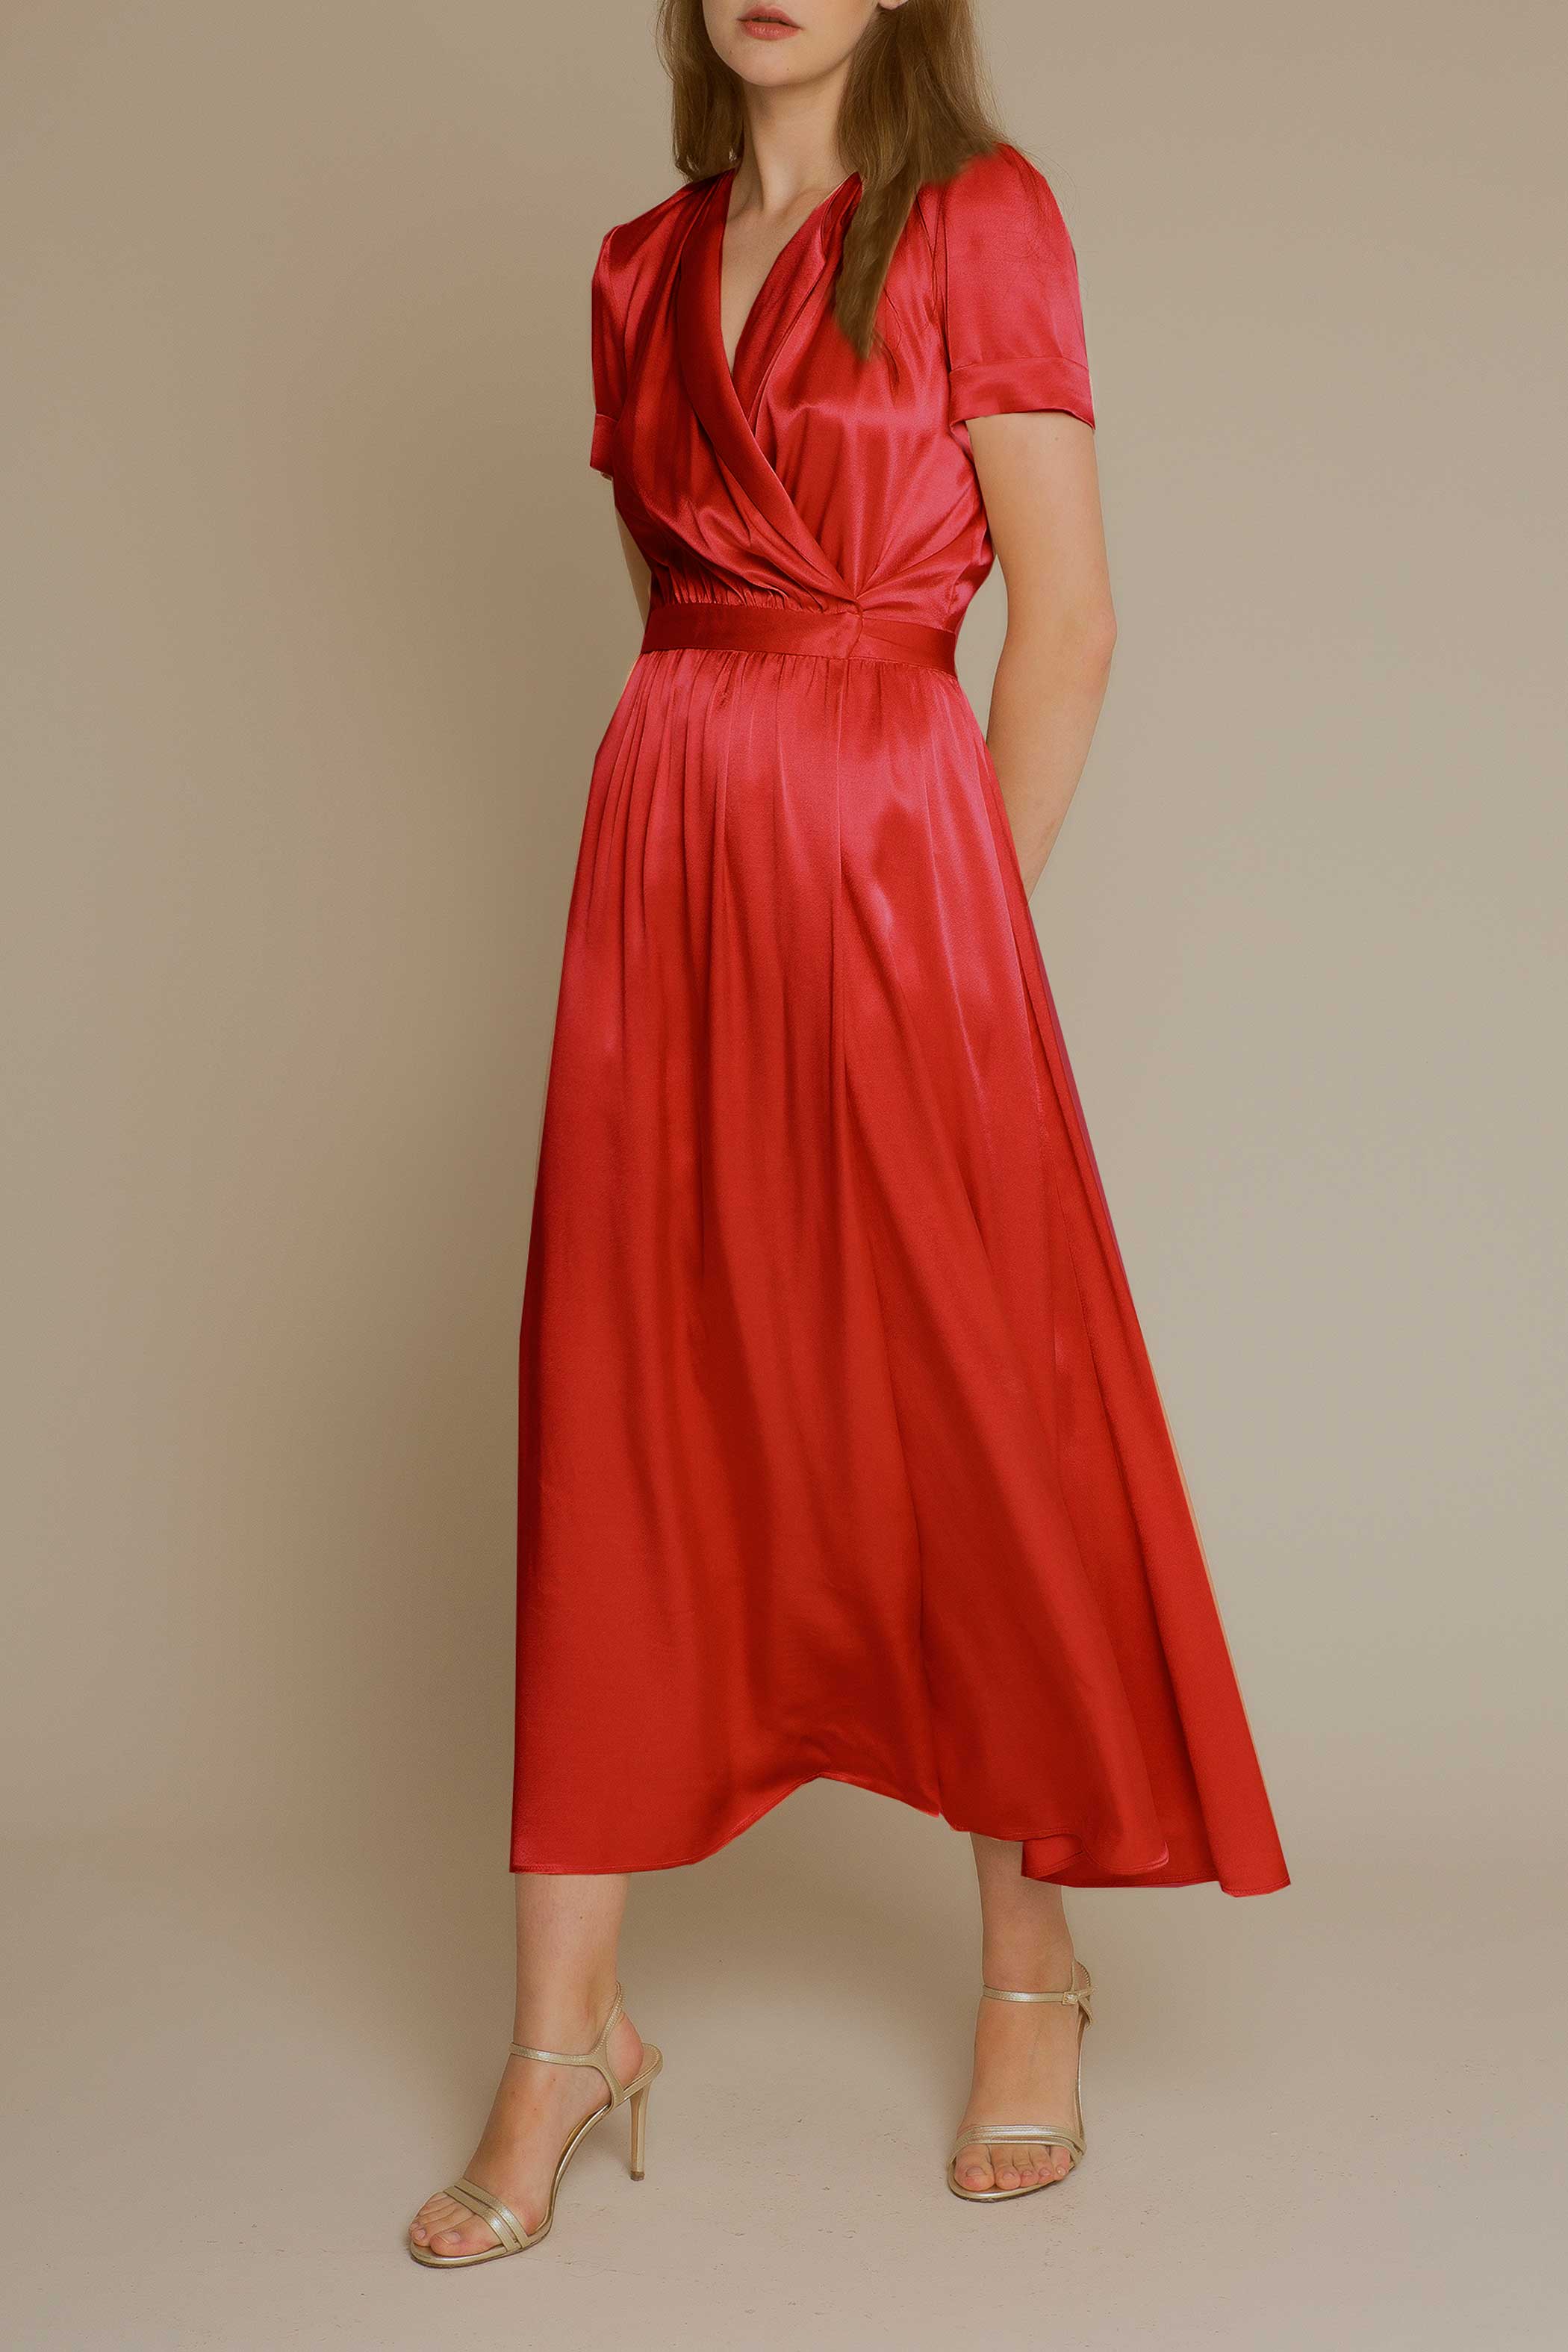 RED satin wrap dress